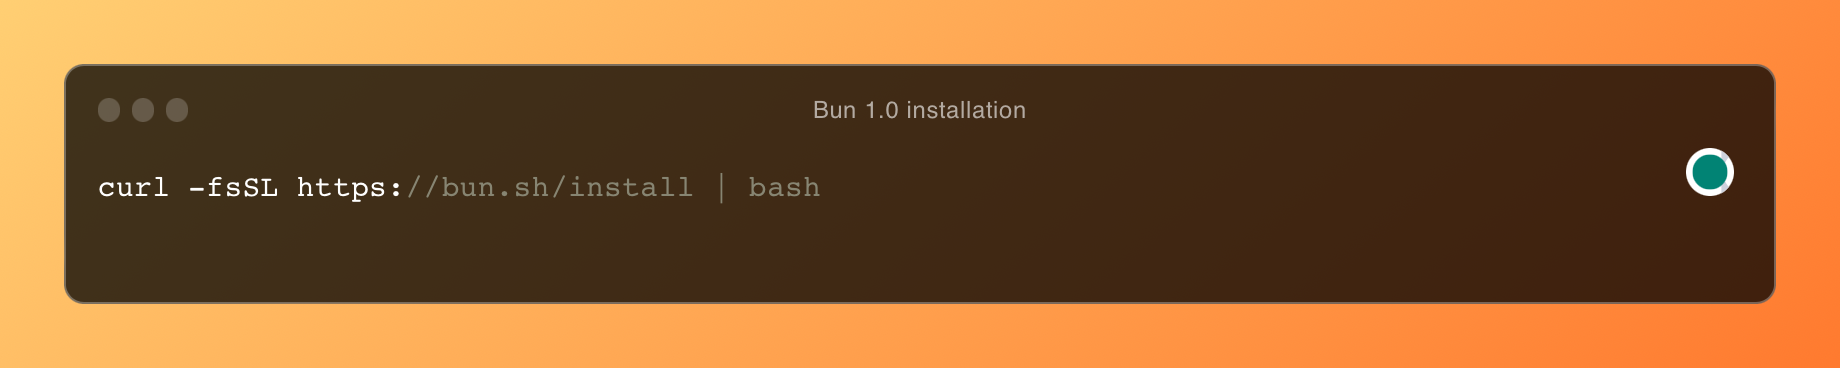 Instalace Bun 1.0